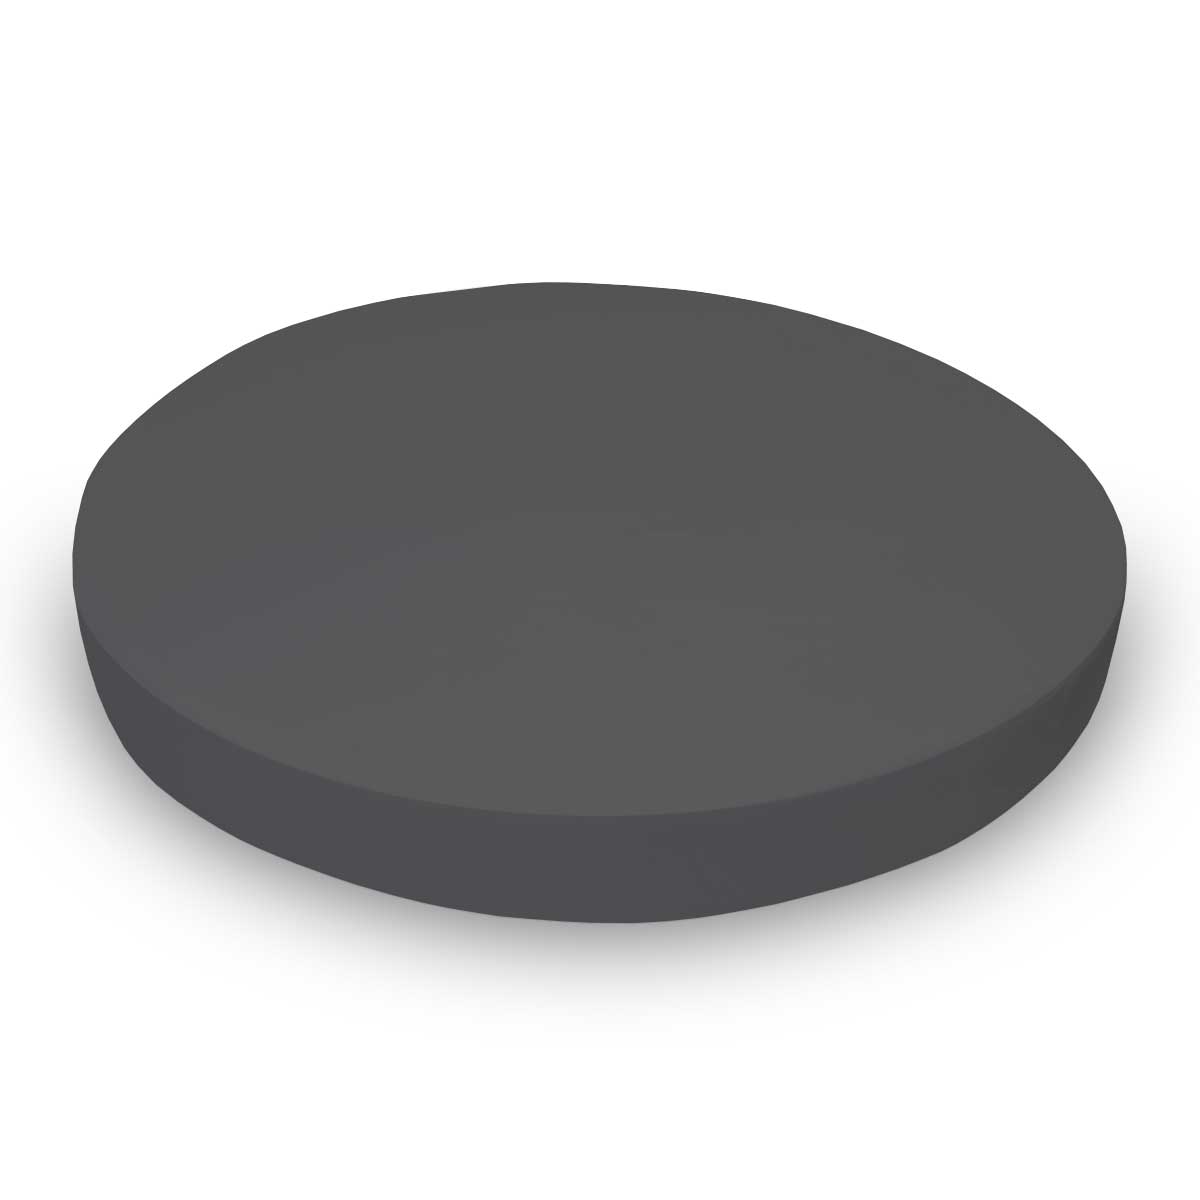 Oval Crib (Stokke Sleepi) - Flannel - Dark Grey - Fitted  Oval